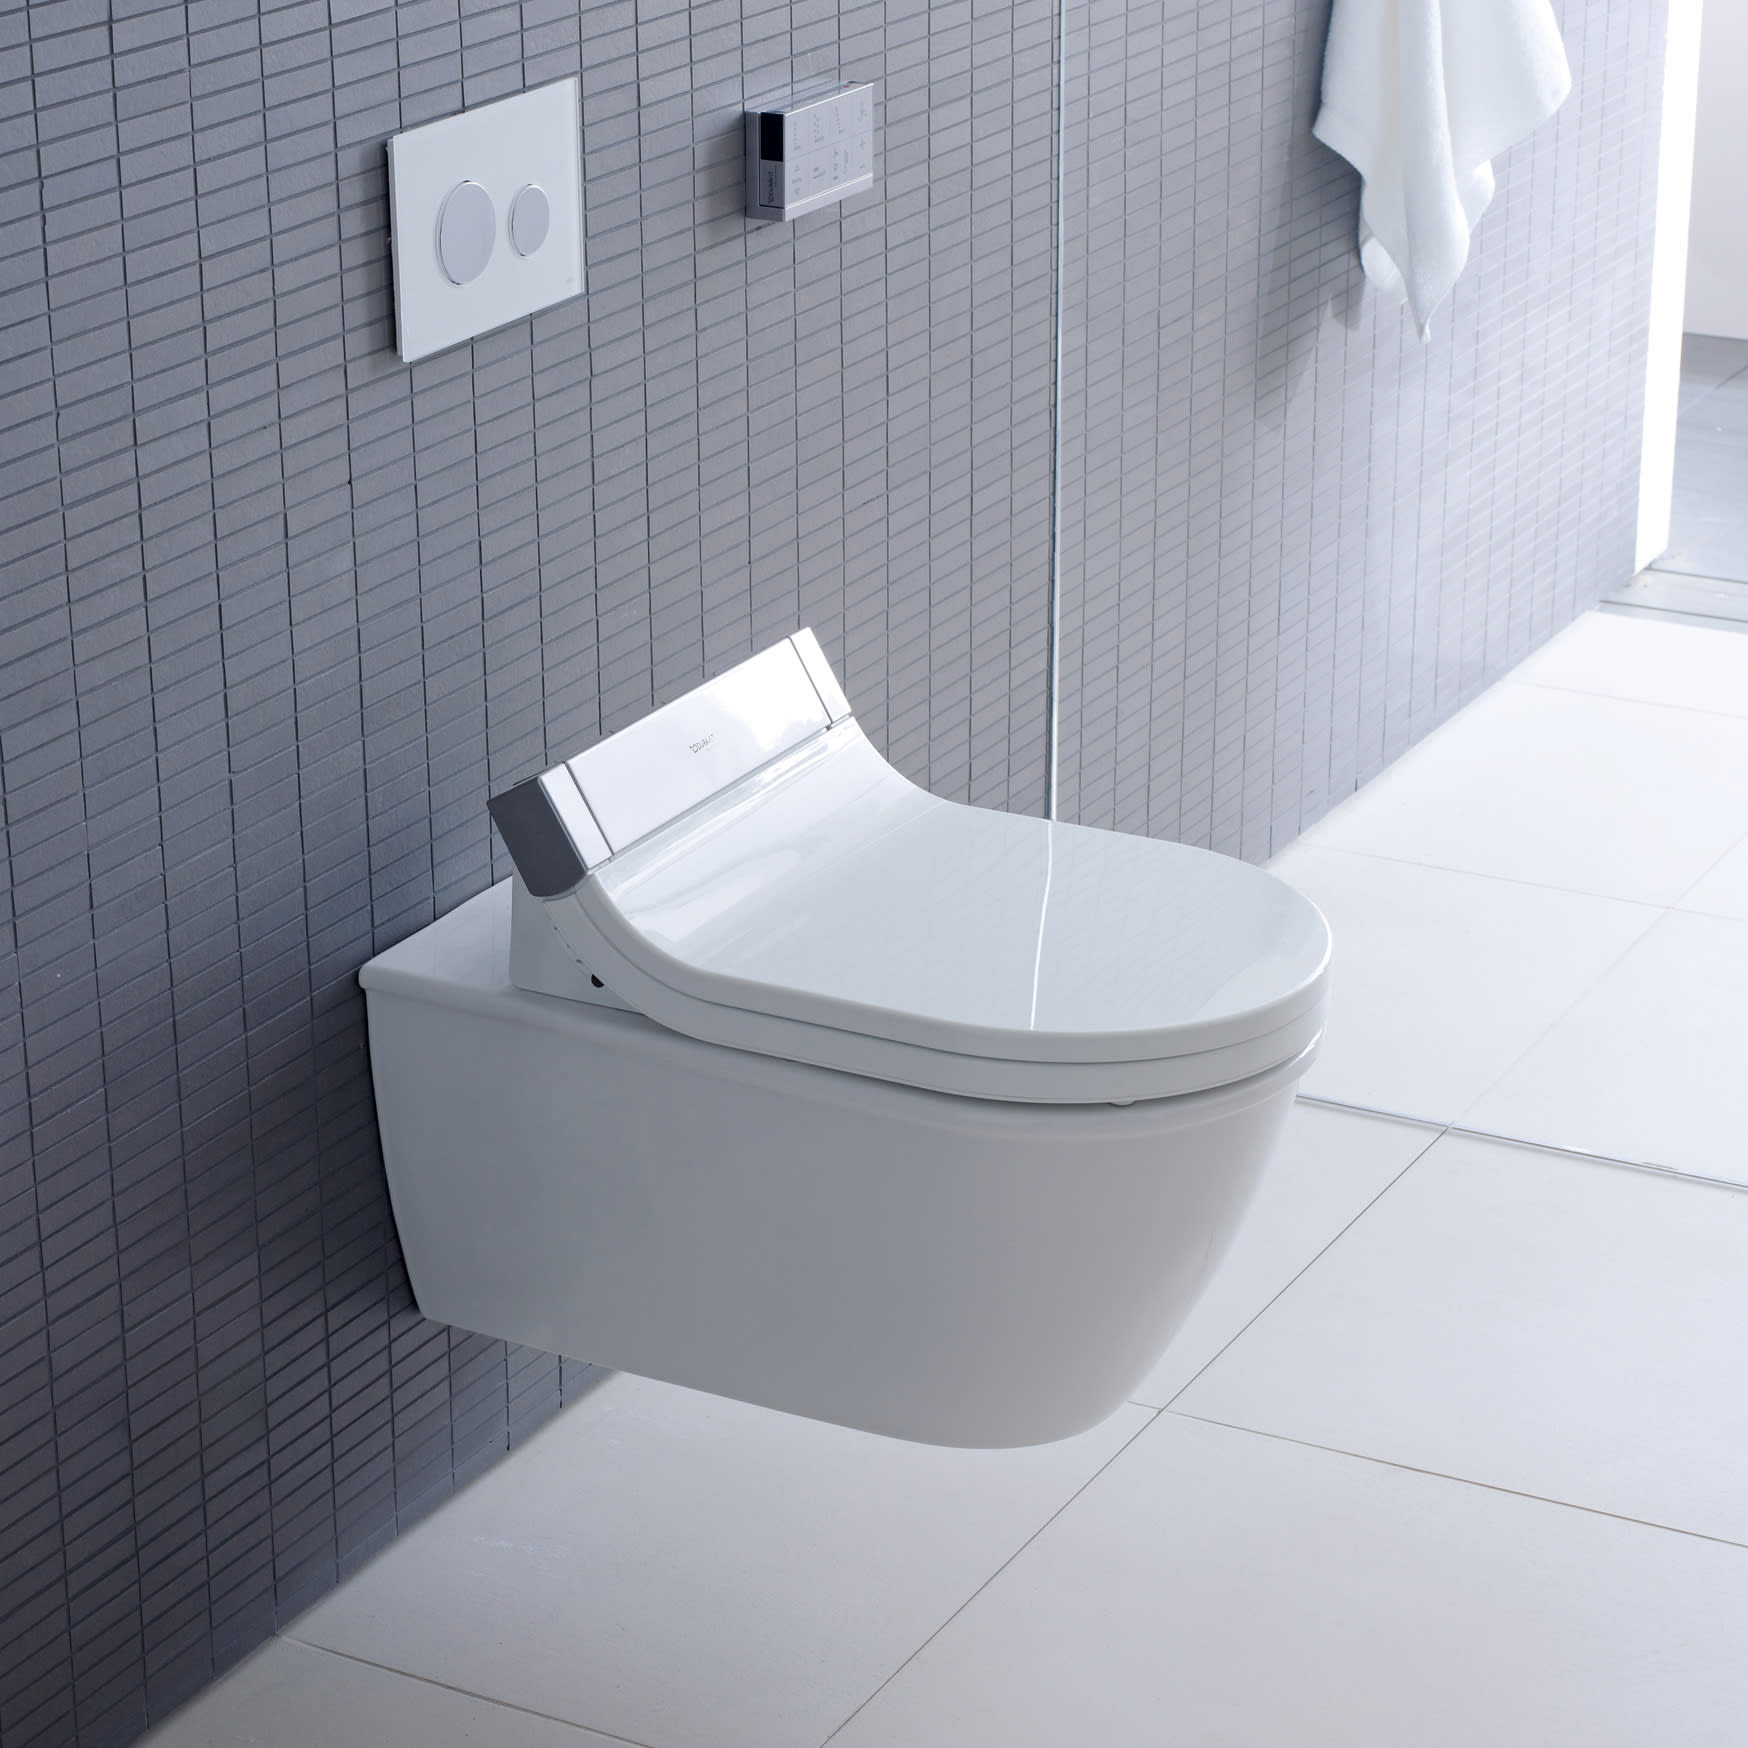 Duravit - High Quality Bathroom Products